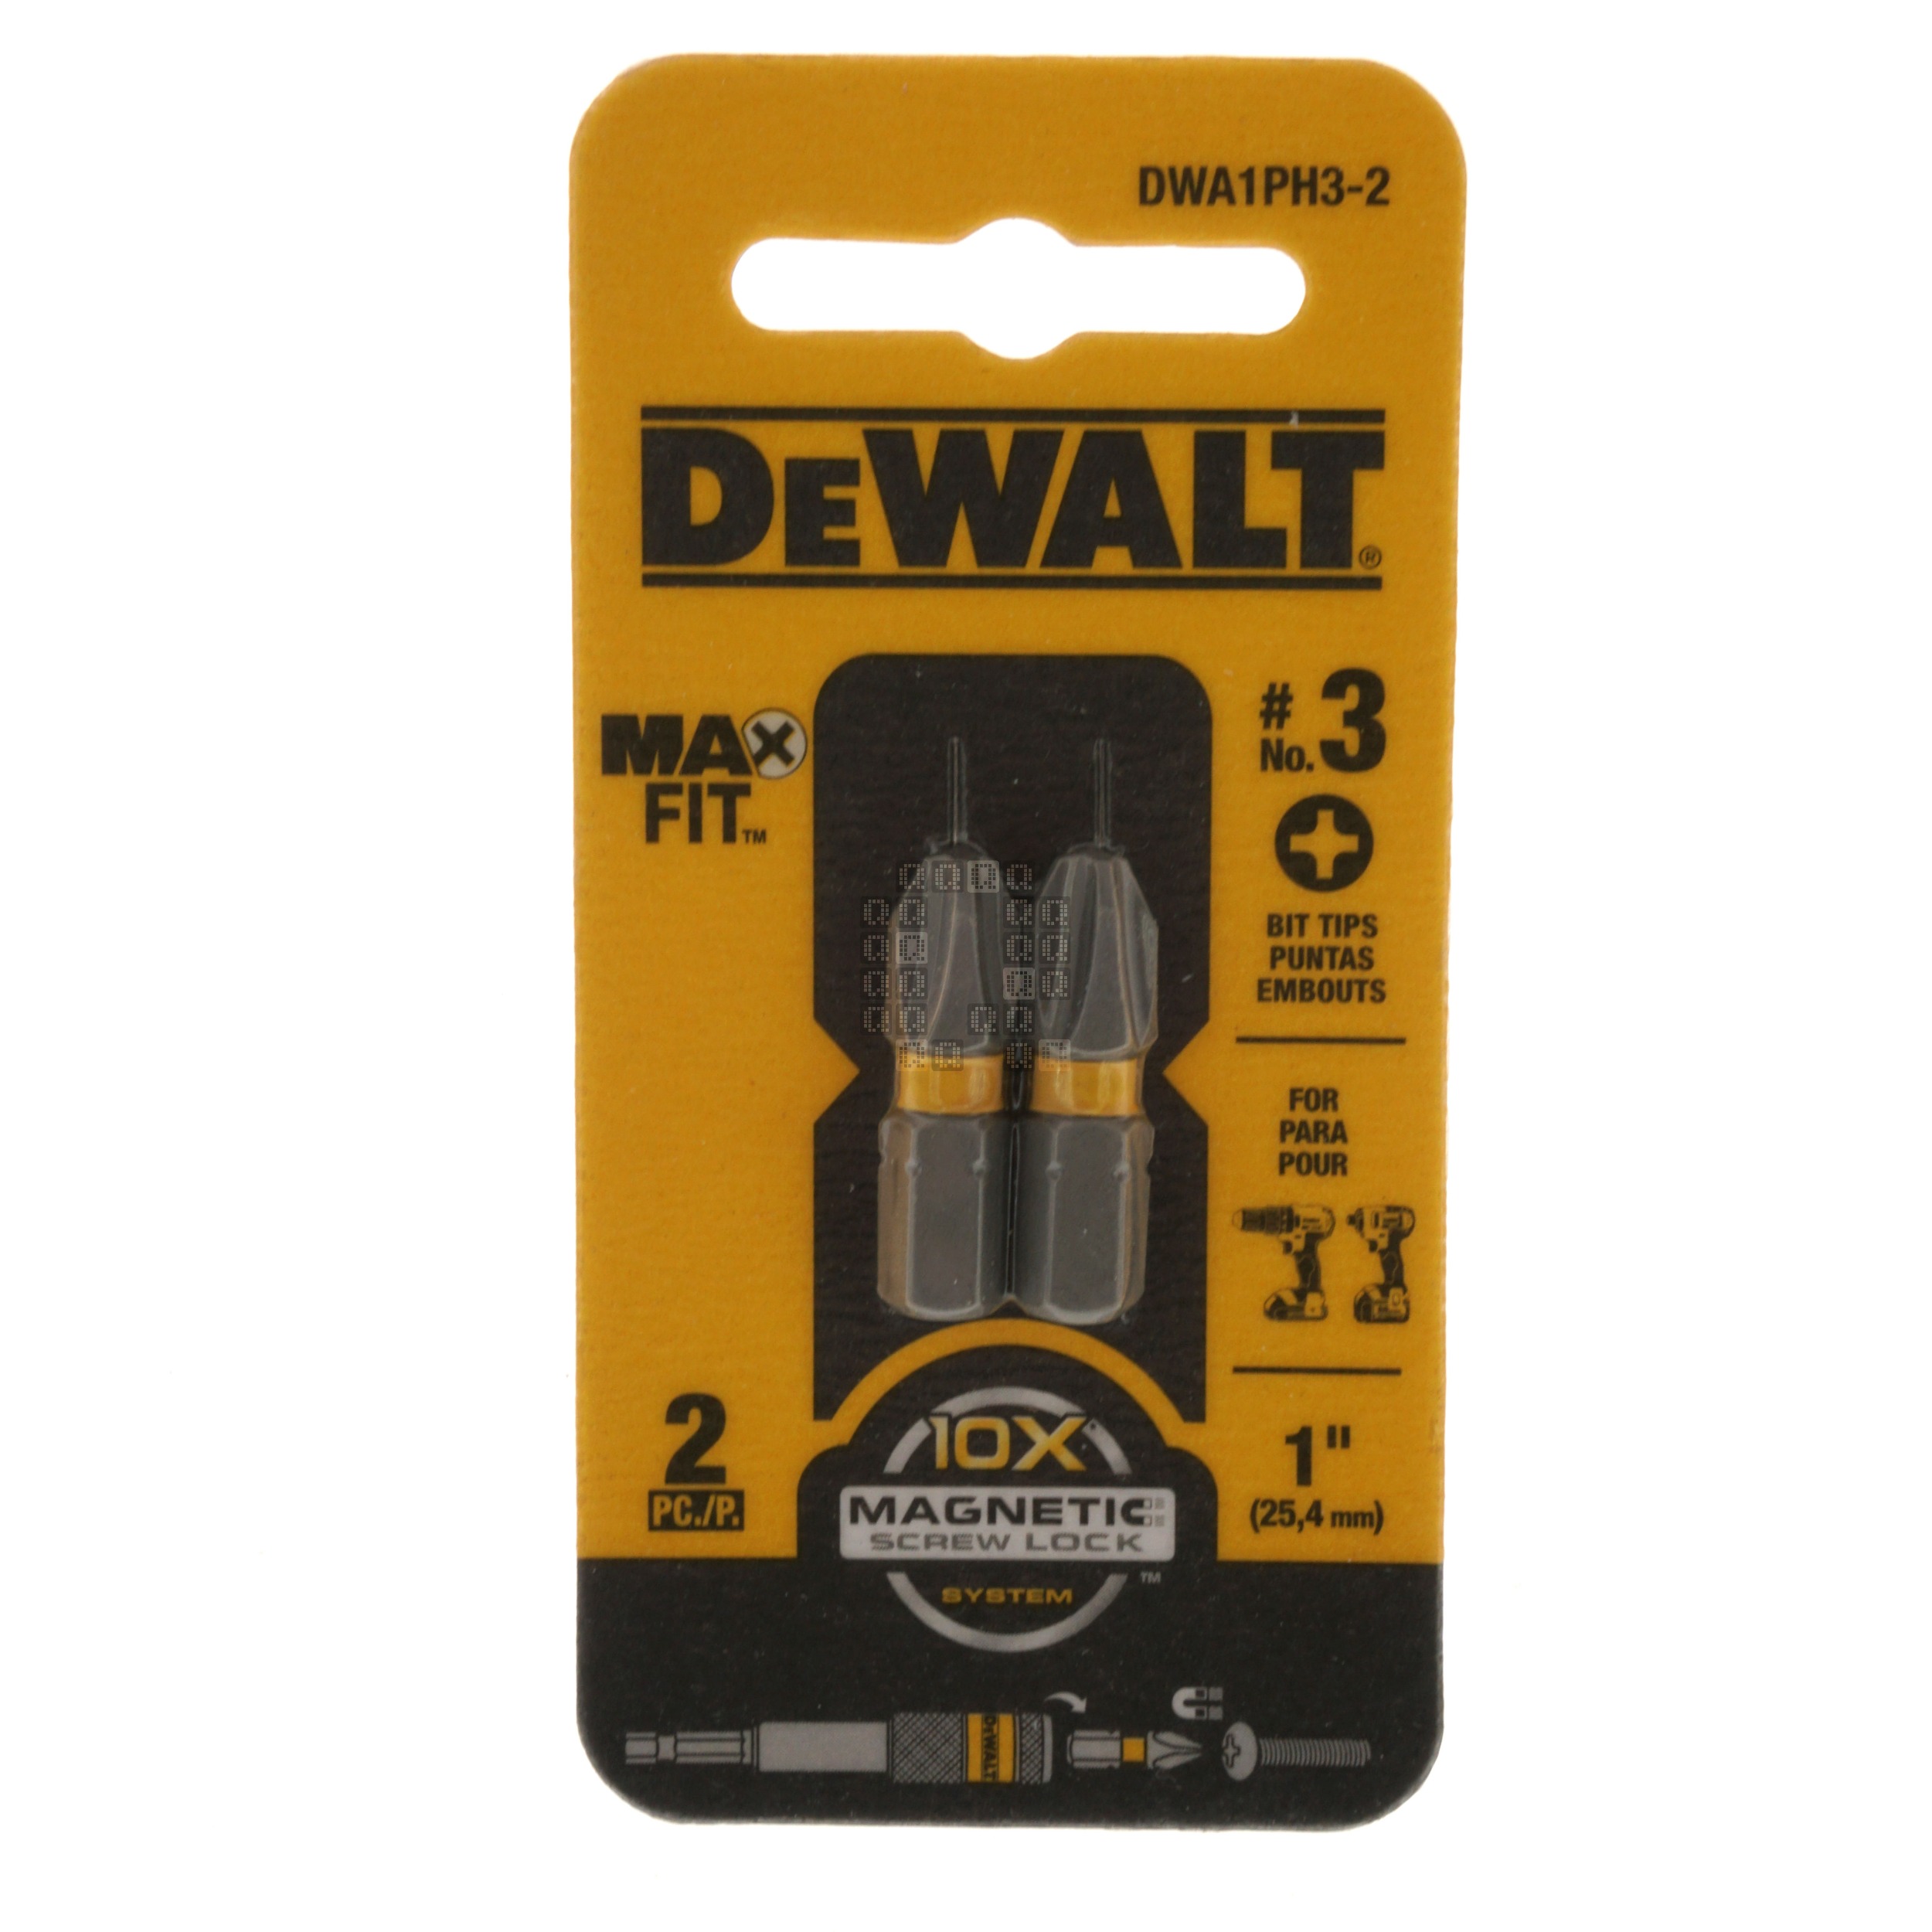 DeWALT DWA1PH3-2 PH3 / #3 Phillips MAX FIT Bit Tips, 1" Length, 2-Pack